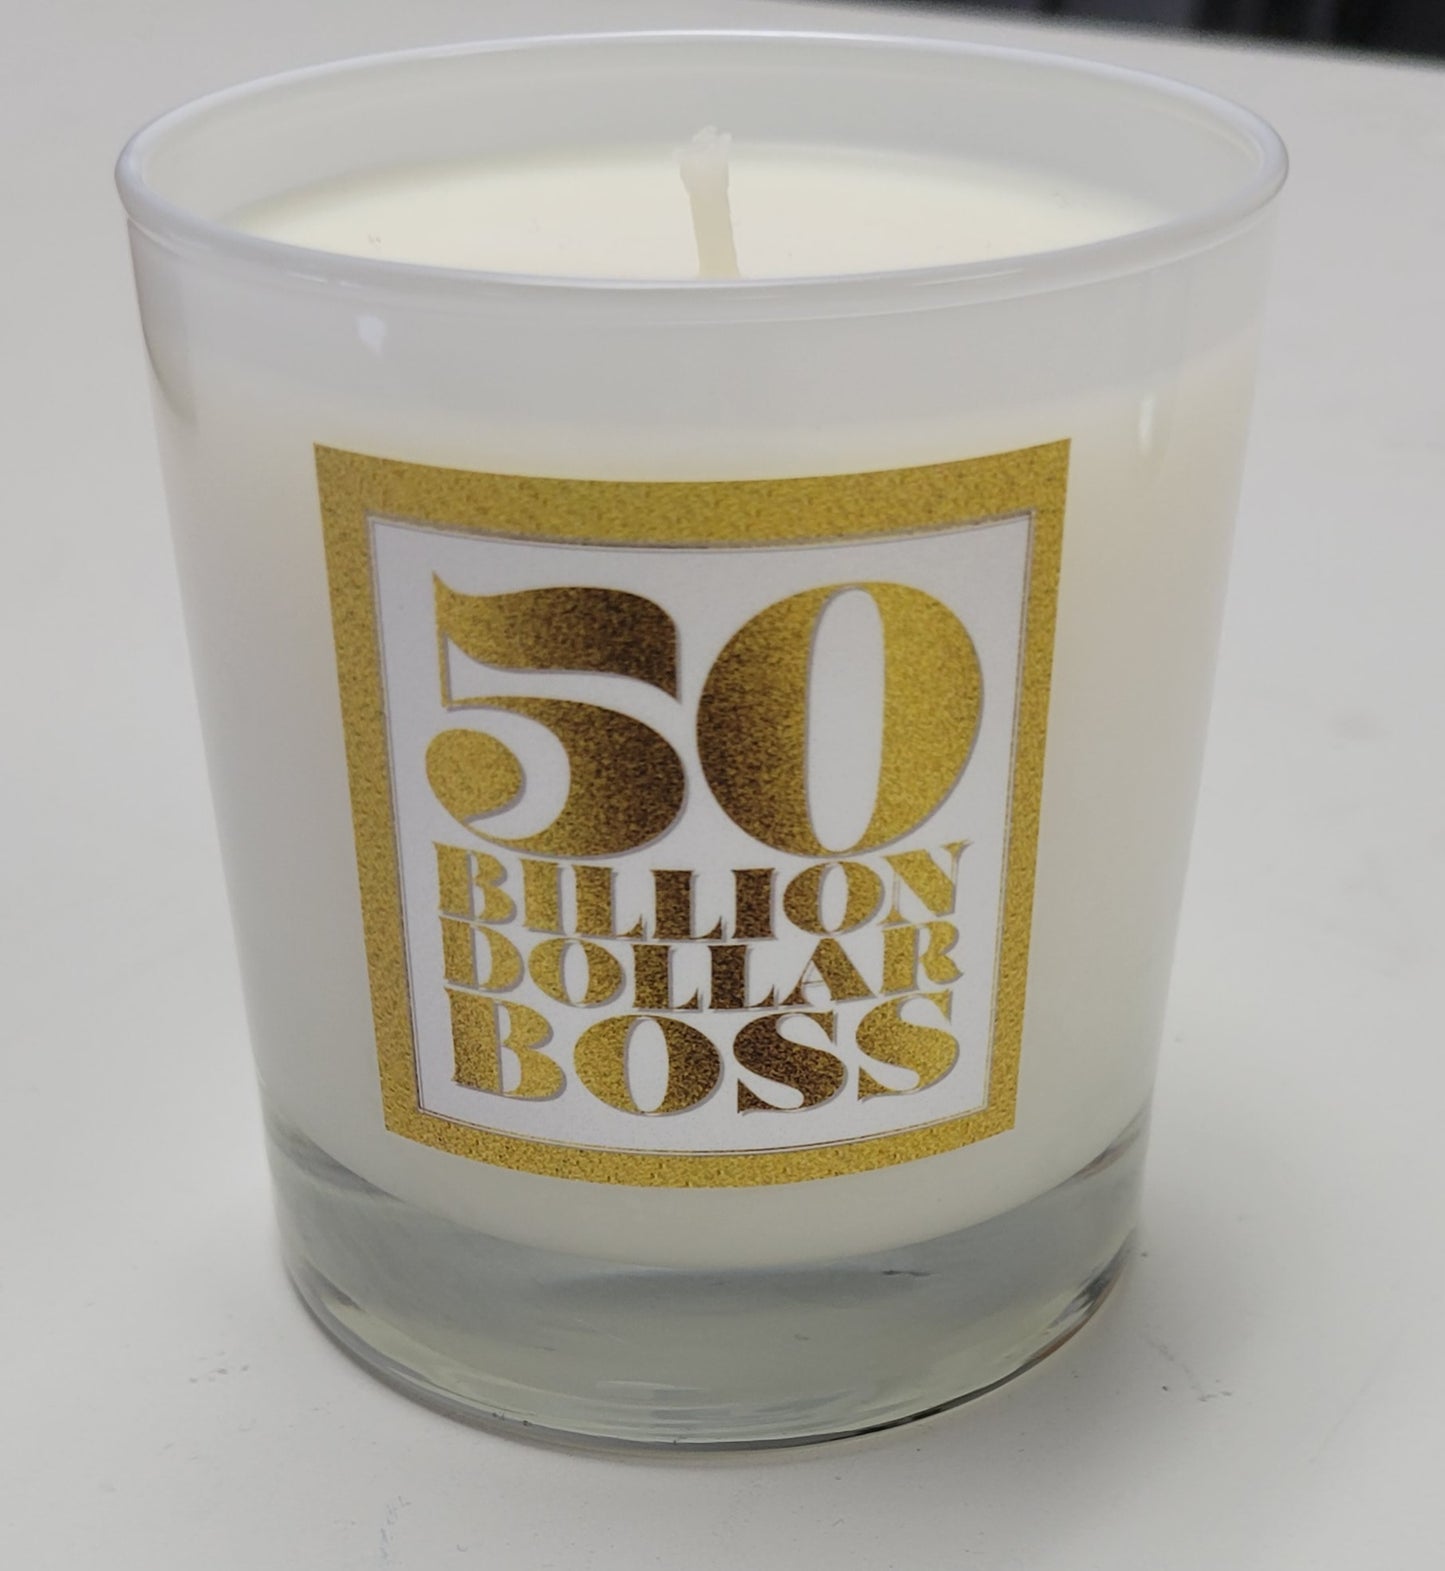 50 Billion Dollar Boss™ candle